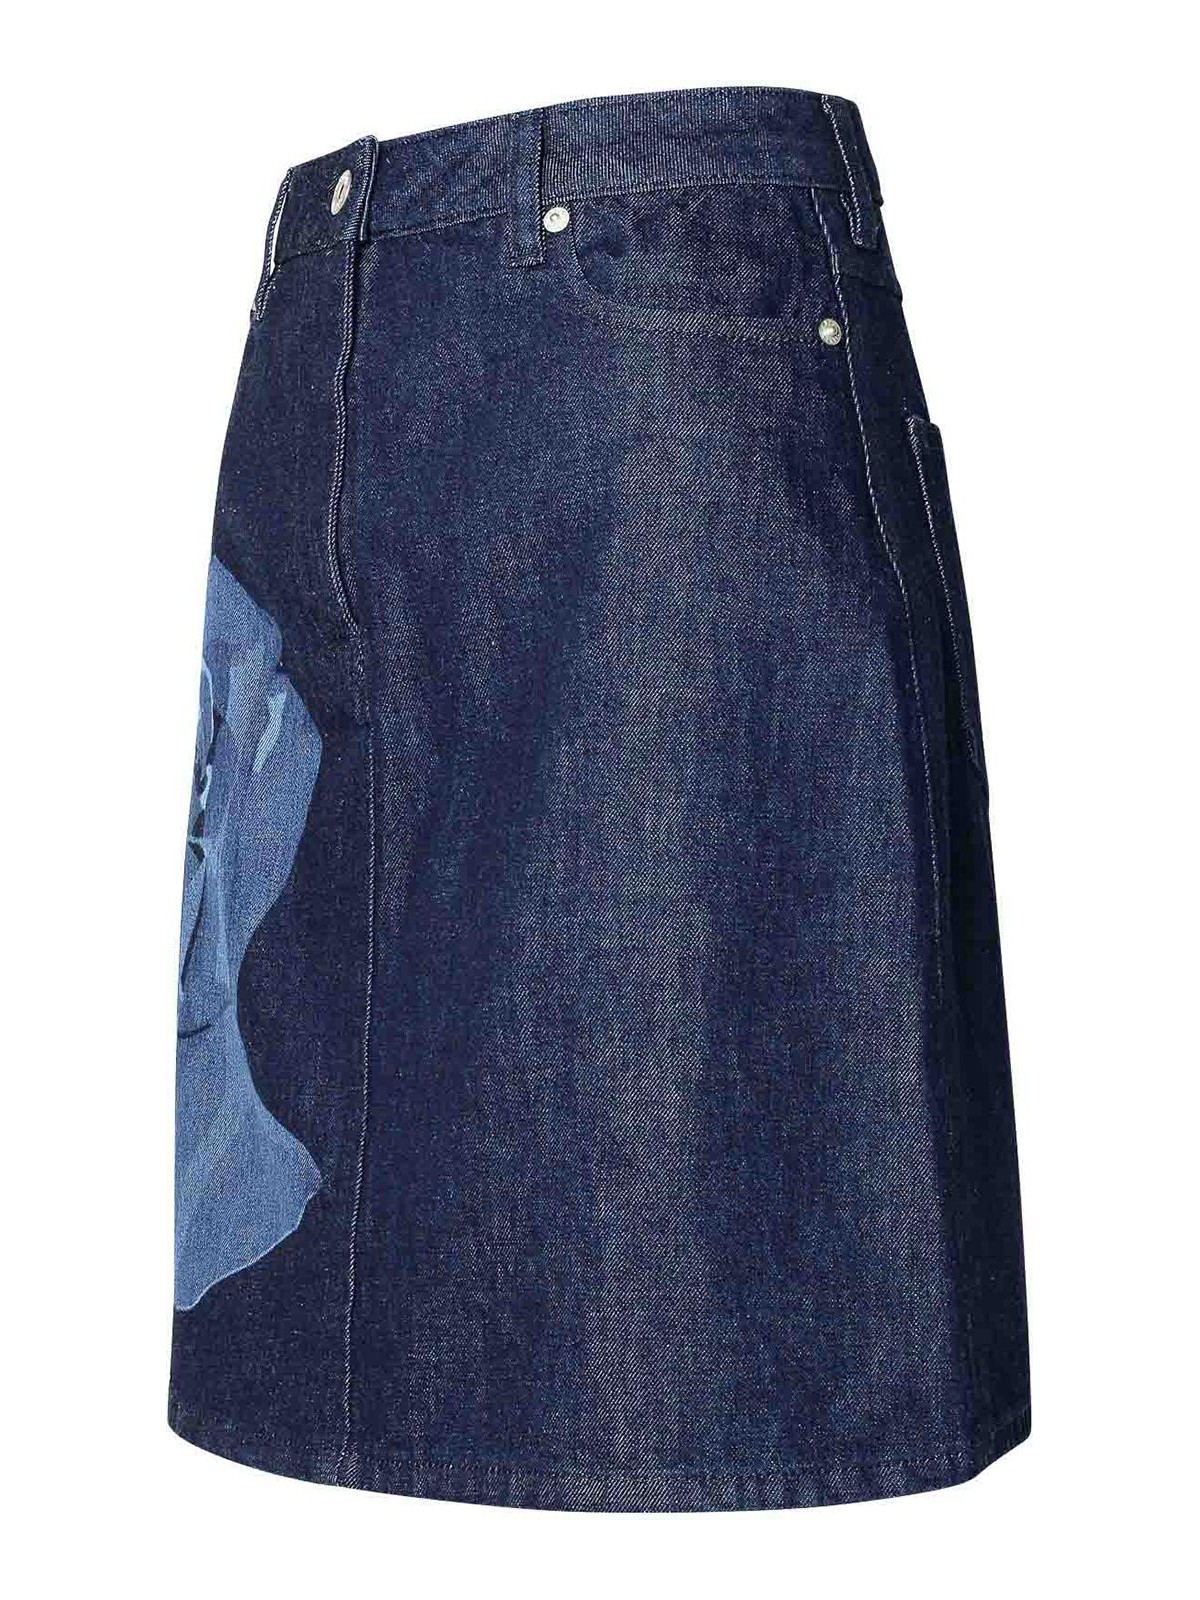 Shop Kenzo Blue Cotton Miniskirt